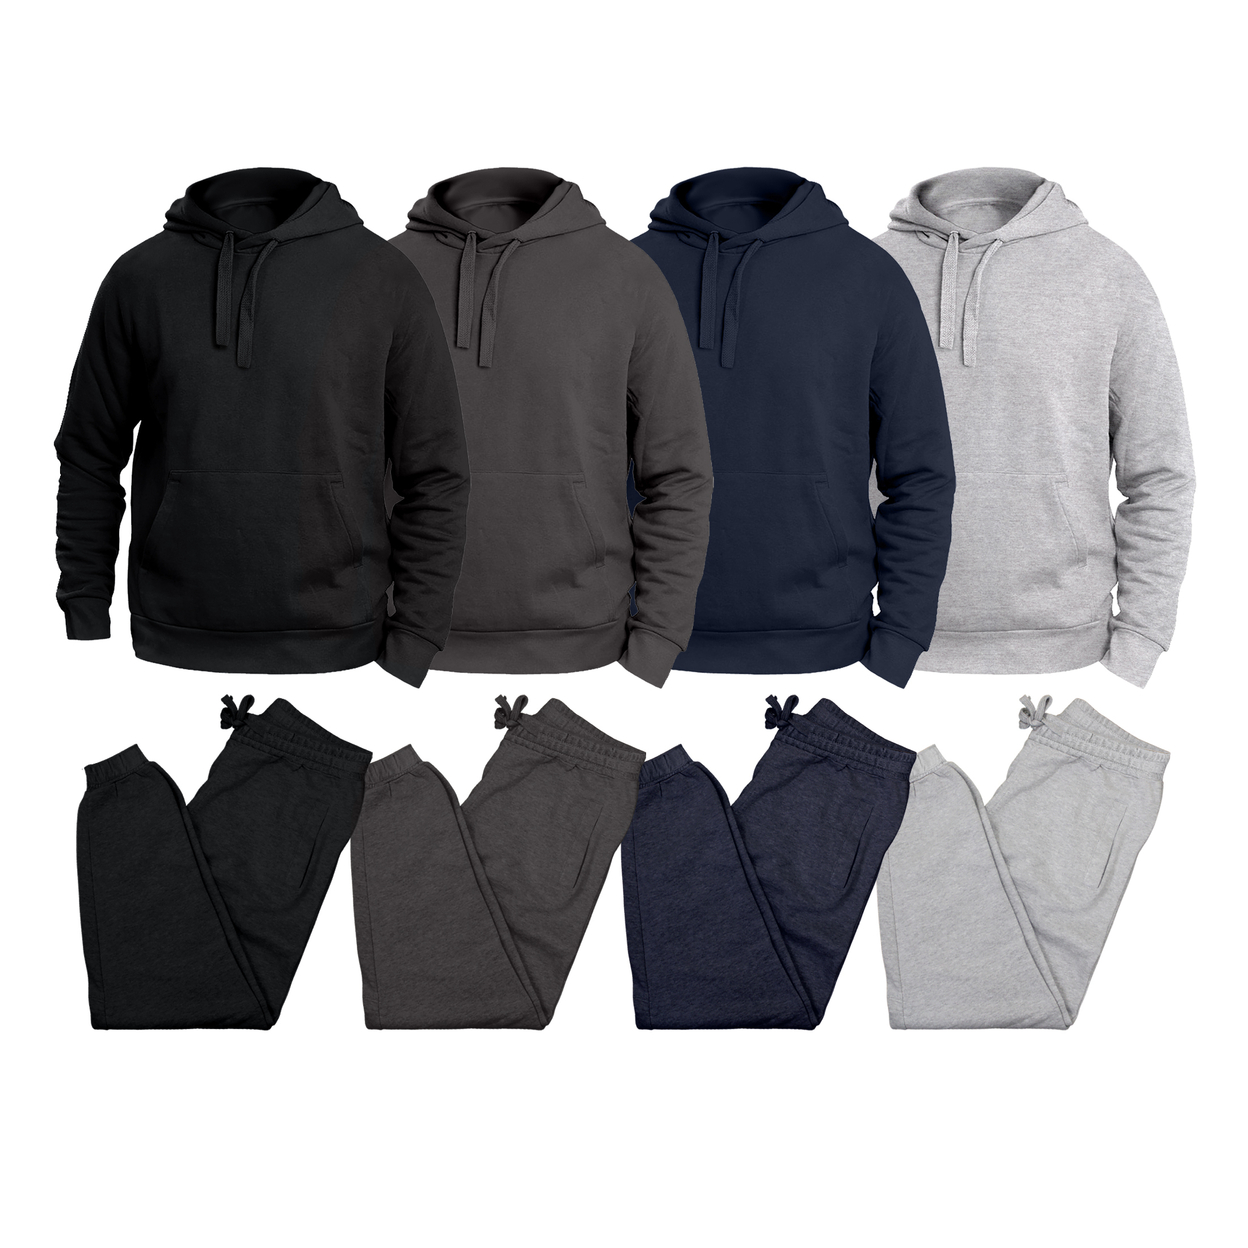 Multi-Pack: Big & Tall Men's Winter Warm Cozy Athletic Fleece Lined Multi-Pocket Cargo Sweatsuit - Black, 2-pack, Medium